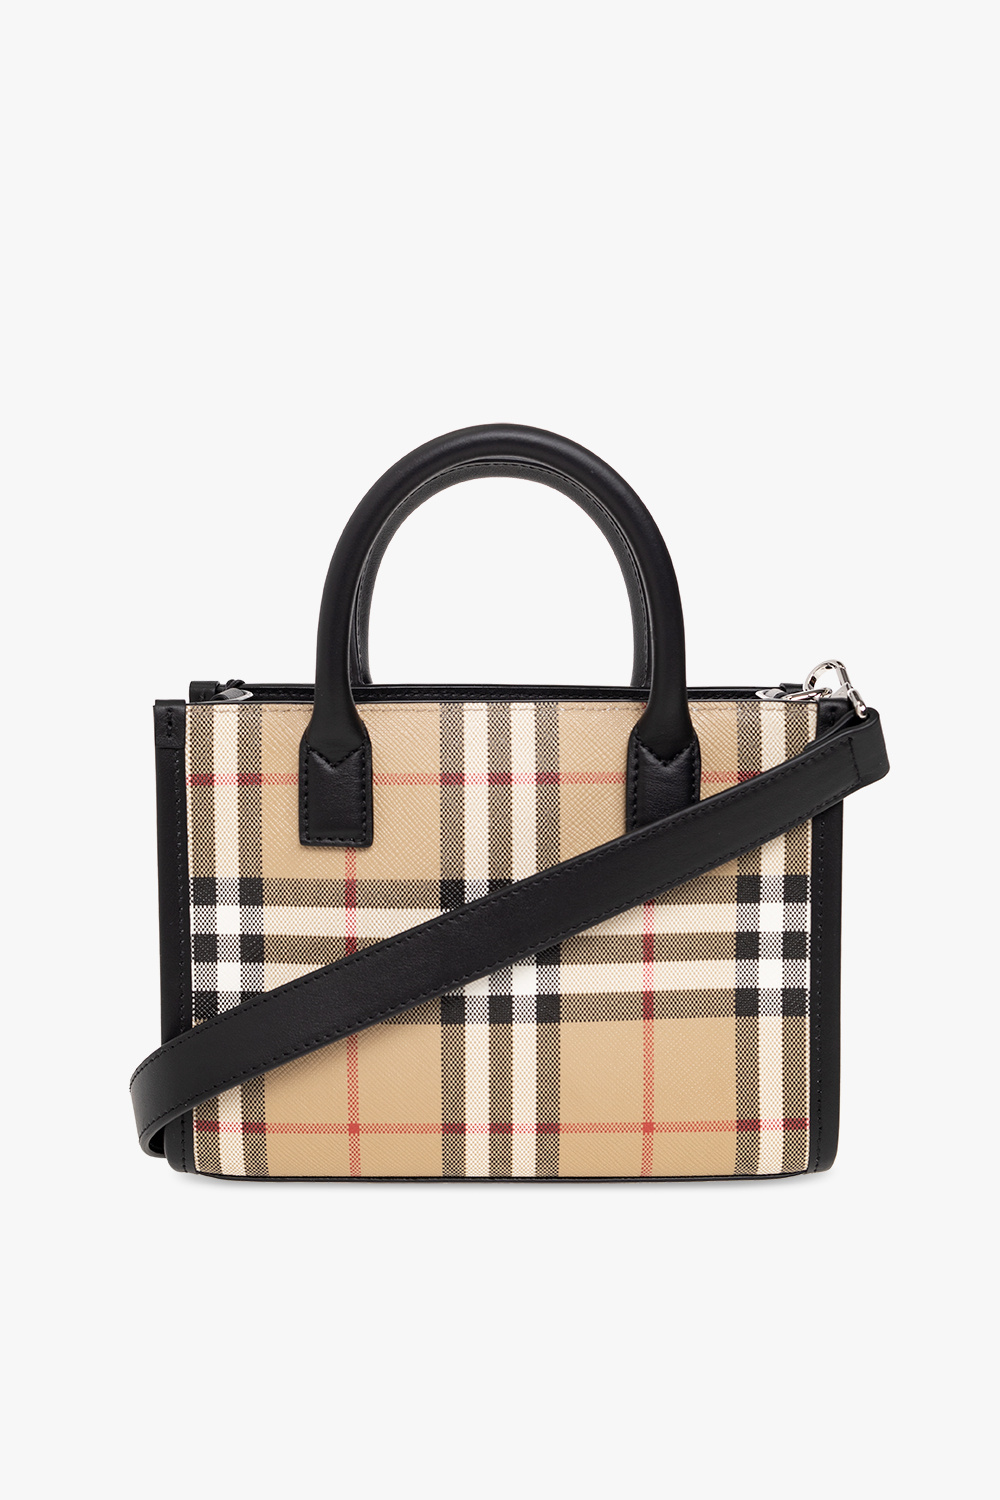 Burberry 🔥‼️FAST SALE‼️🔥Authentic Burberry Monogram Alma Bag